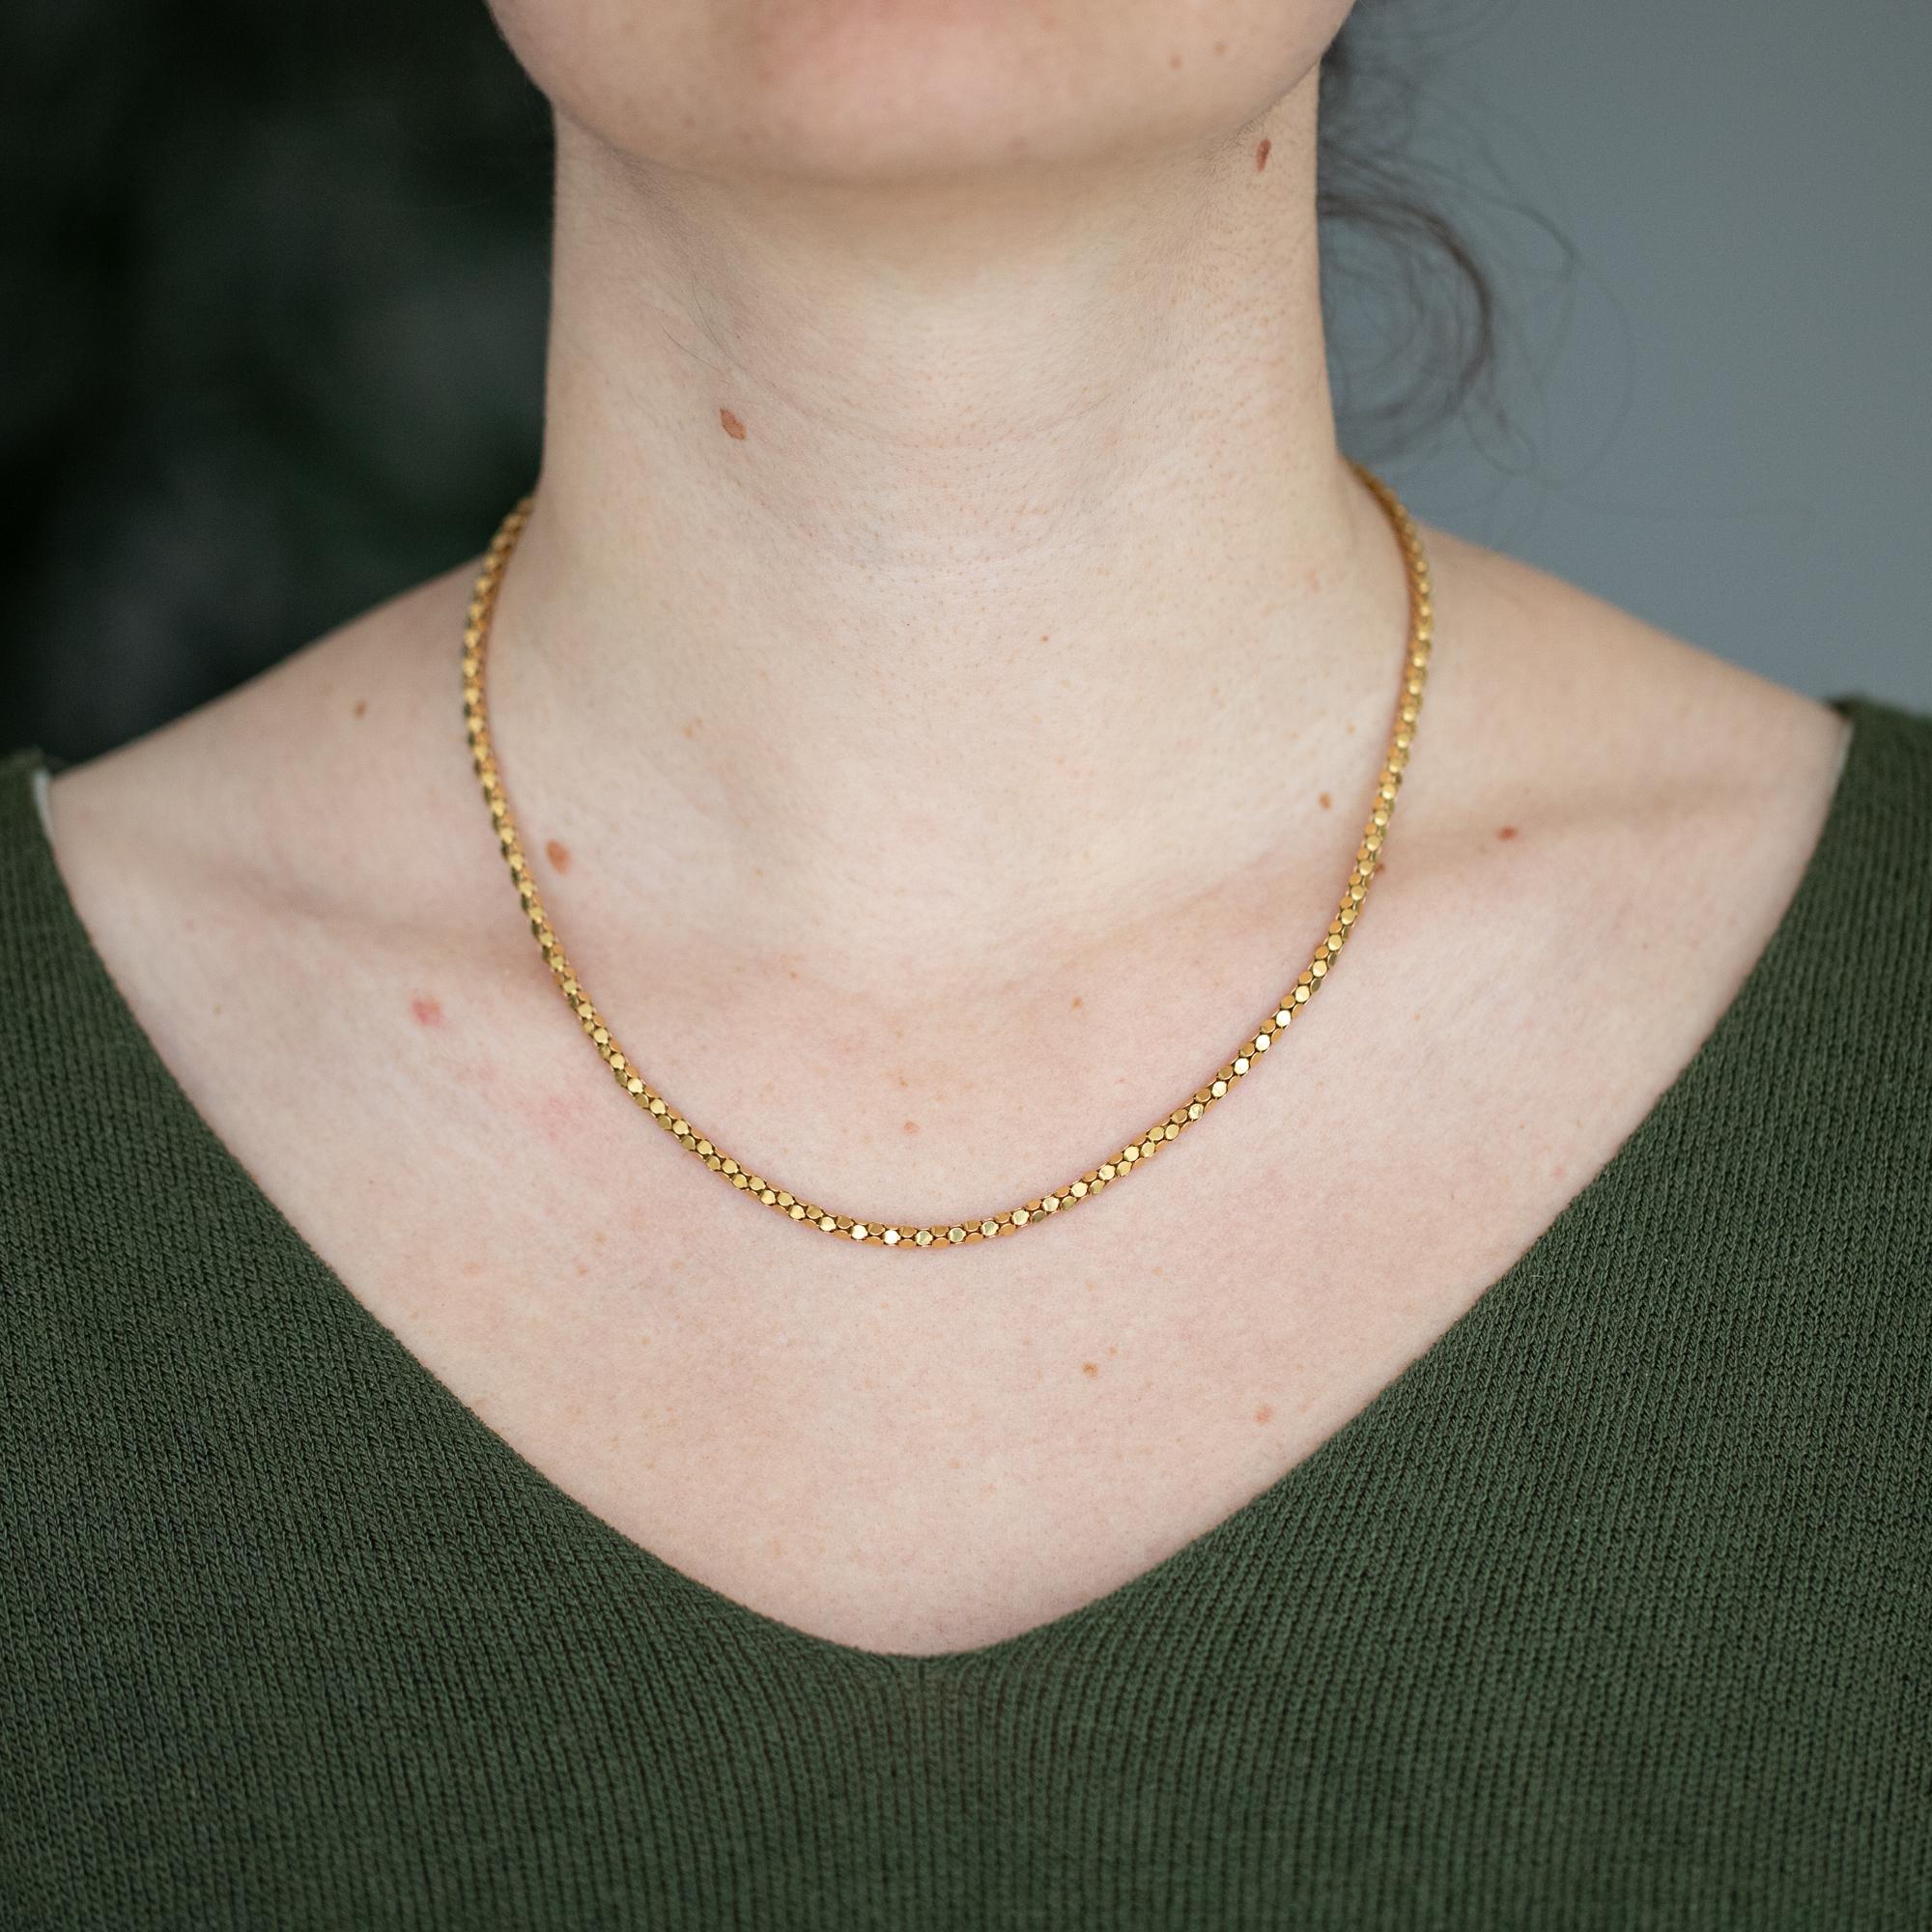 18k solid gold Retro popcorn chain - 1960's necklace - 44.5 cm - 17.25 inch 5